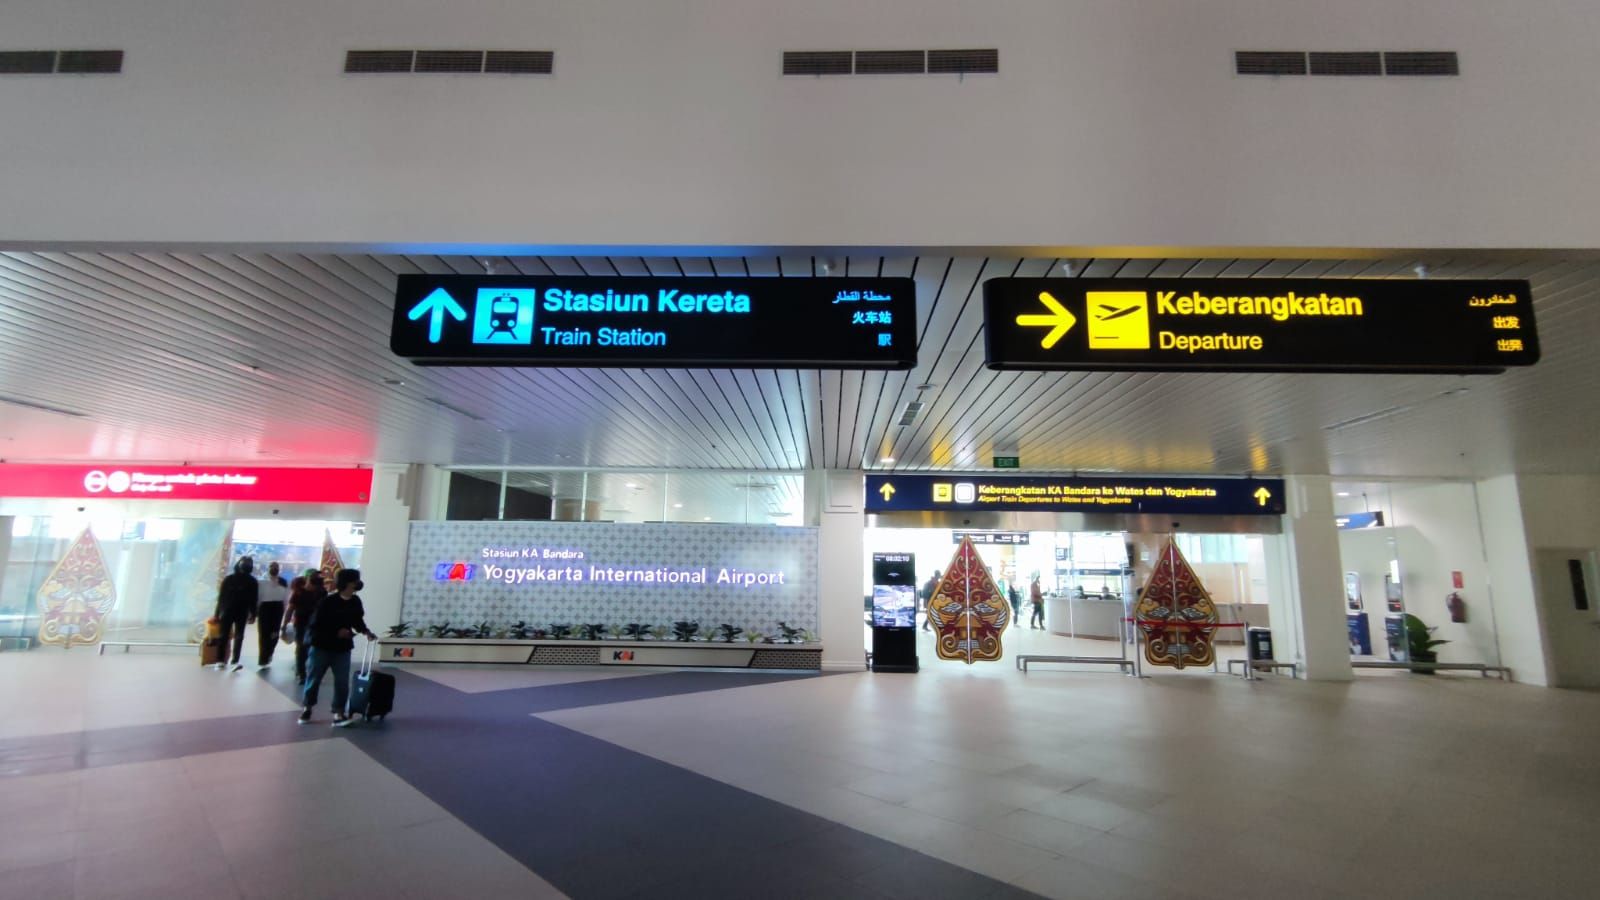 Stasiun Kereta Yogyakarta International Airport